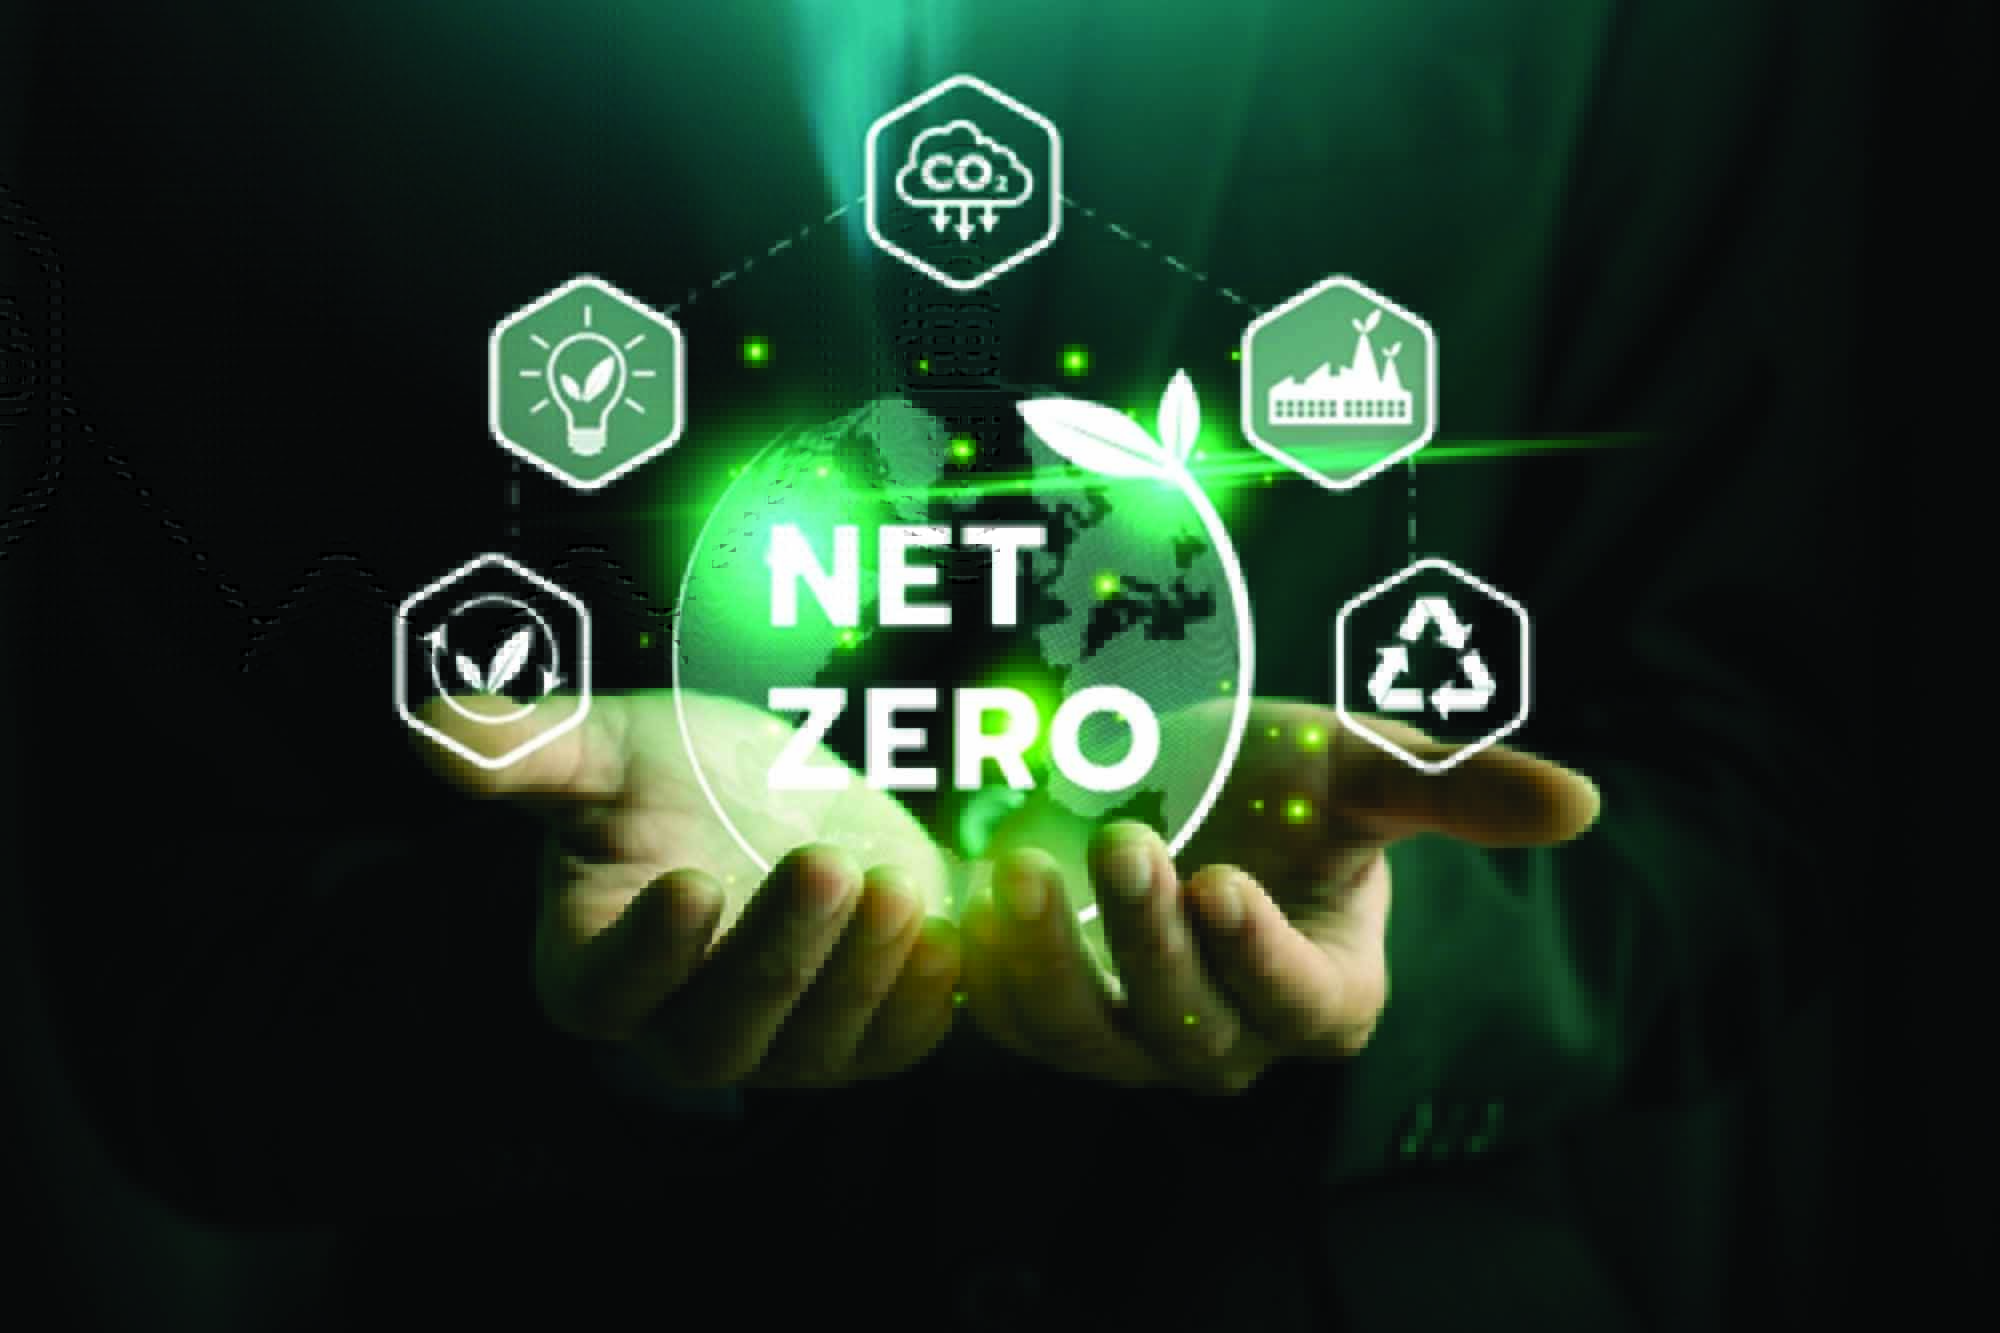 Green growth for net zero target